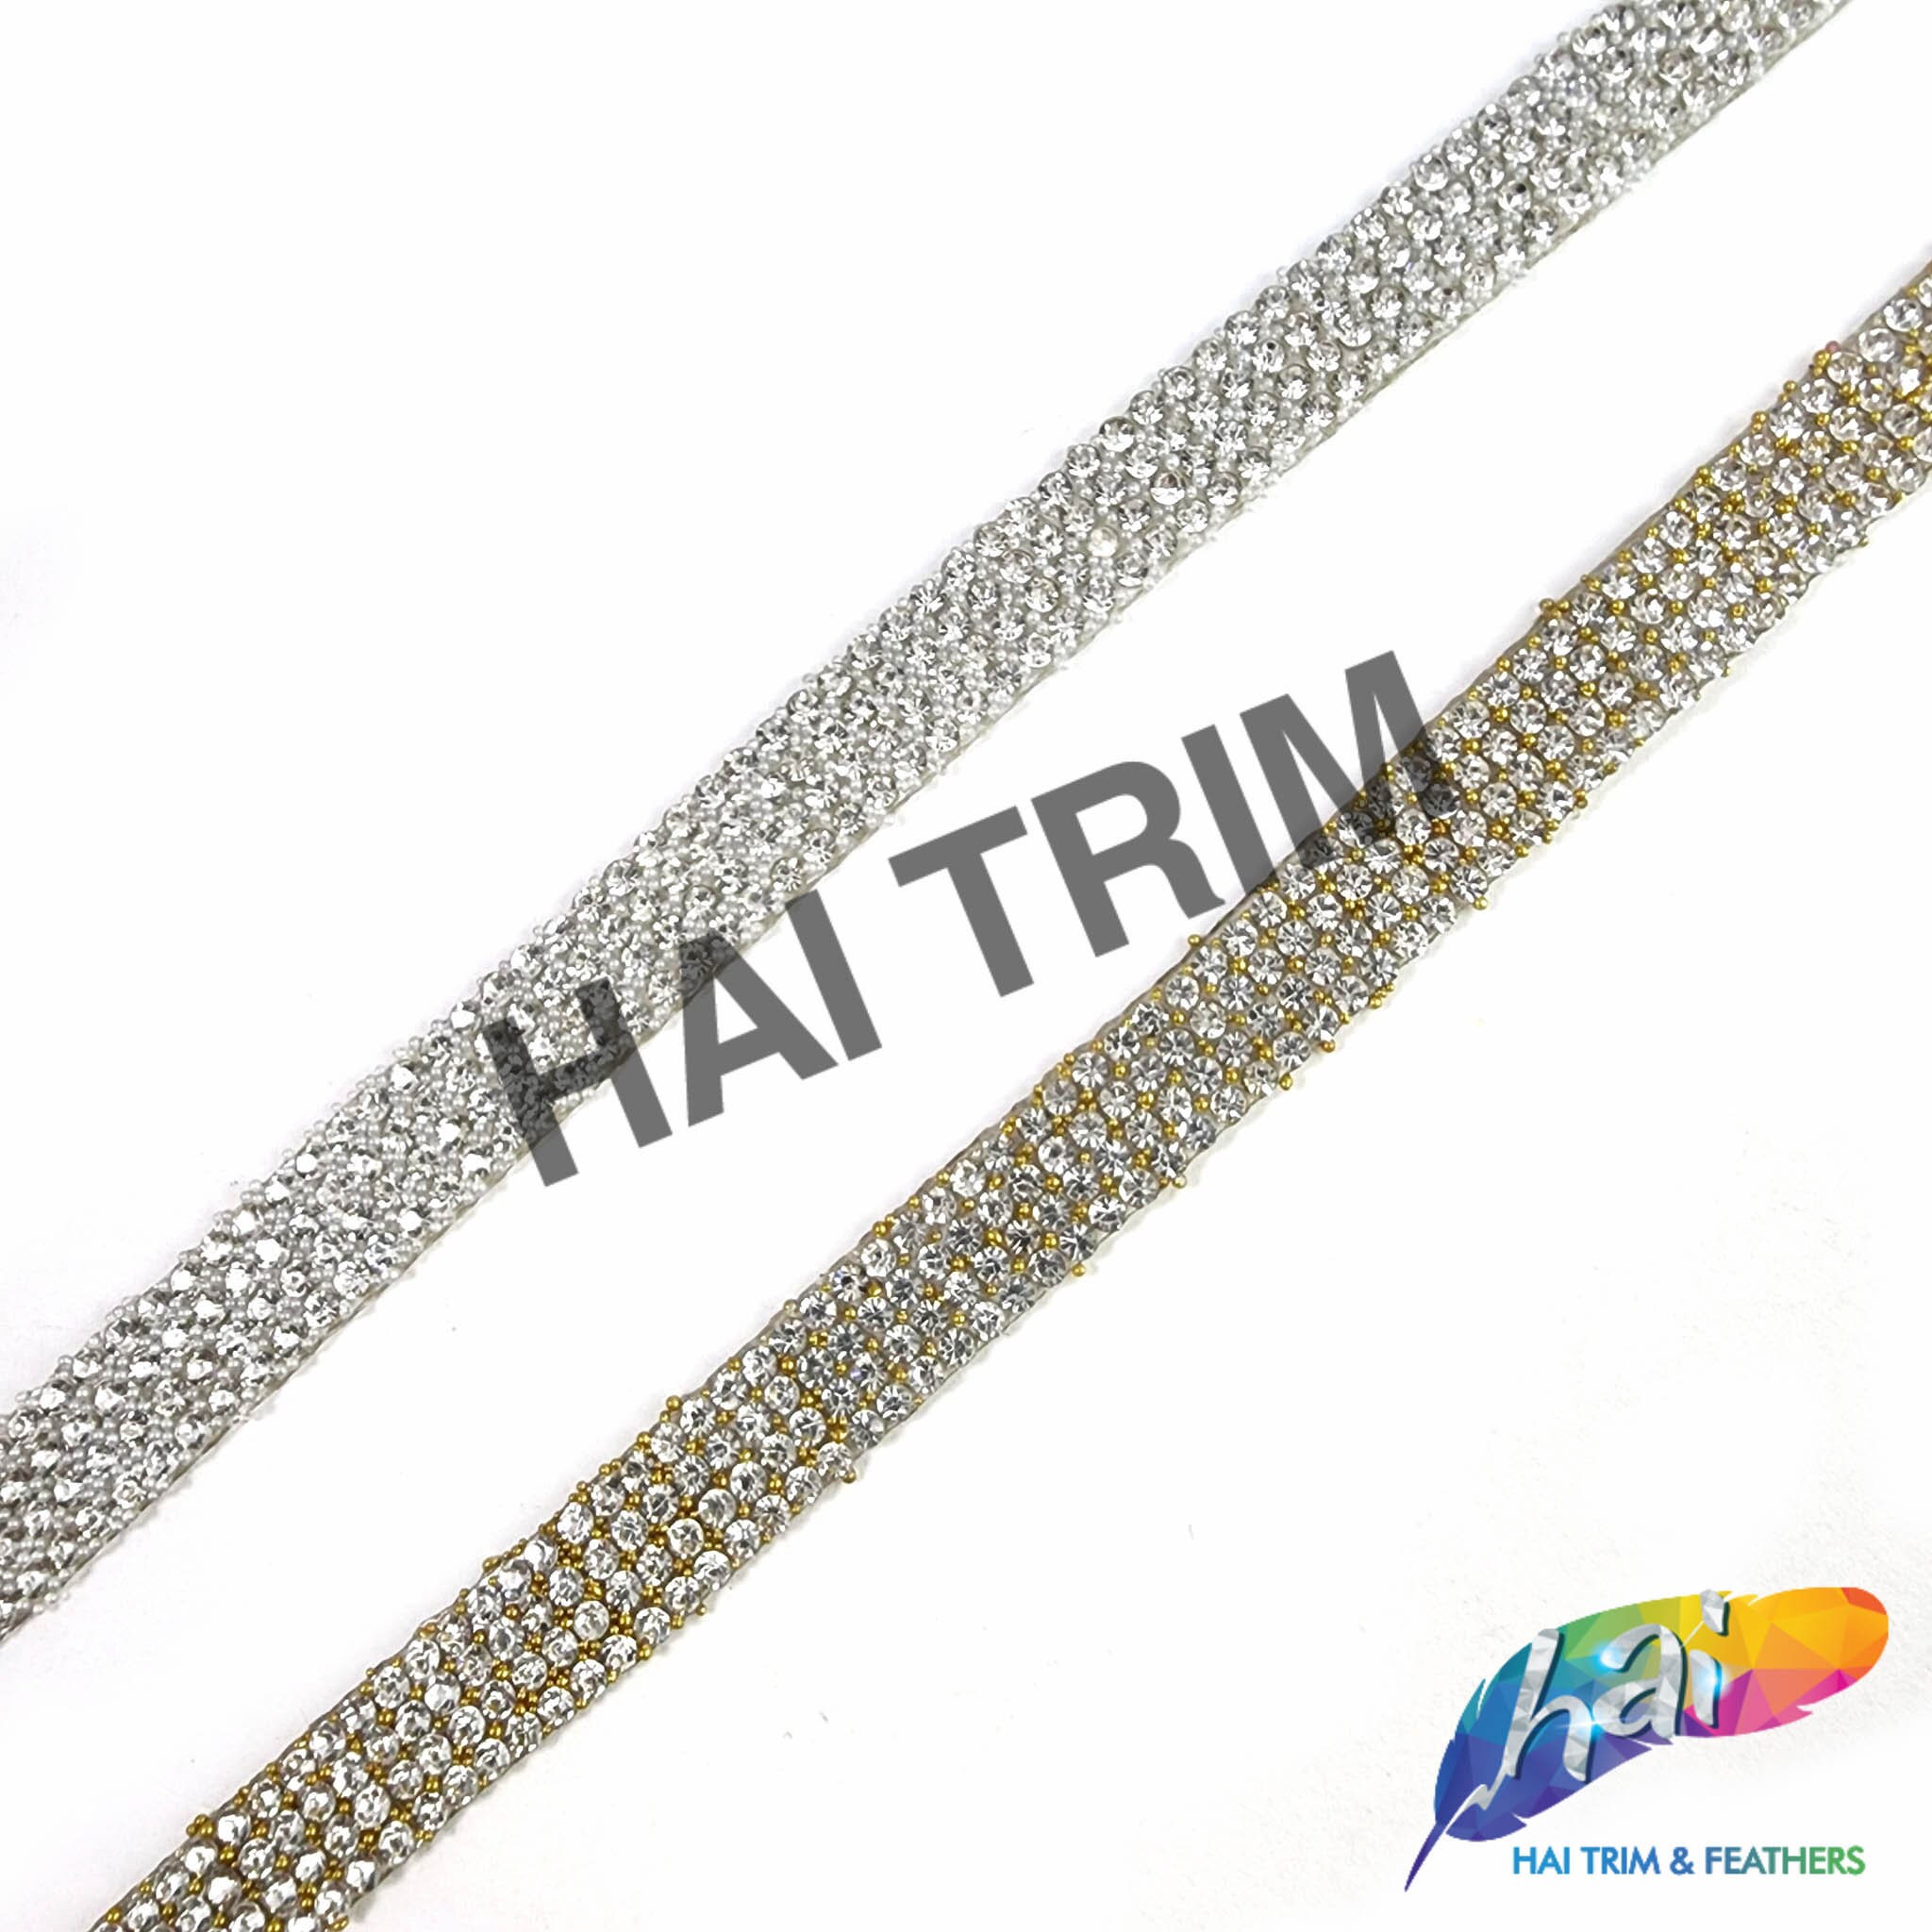 Vintage Metallic Silver and Iridescent Rhinestones Fabric Backed Trim - 6  - Metallic - Trims & Chains - Trims